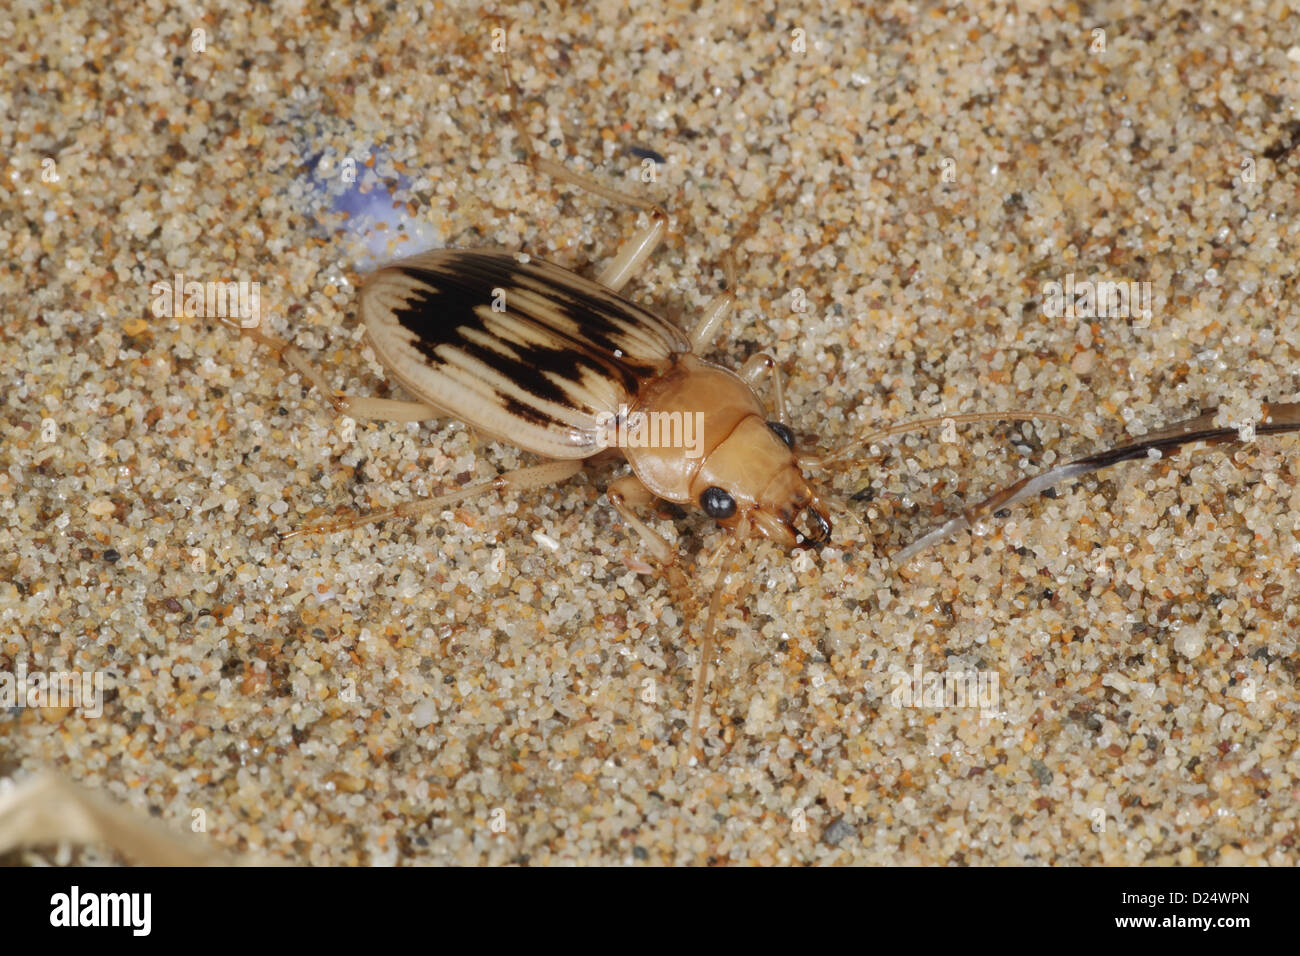 Beachcomber Beetle (Nebria complanata) adult, under strandline debris on beach, Gower Peninsula, Glamorgan, Wales, august Stock Photo